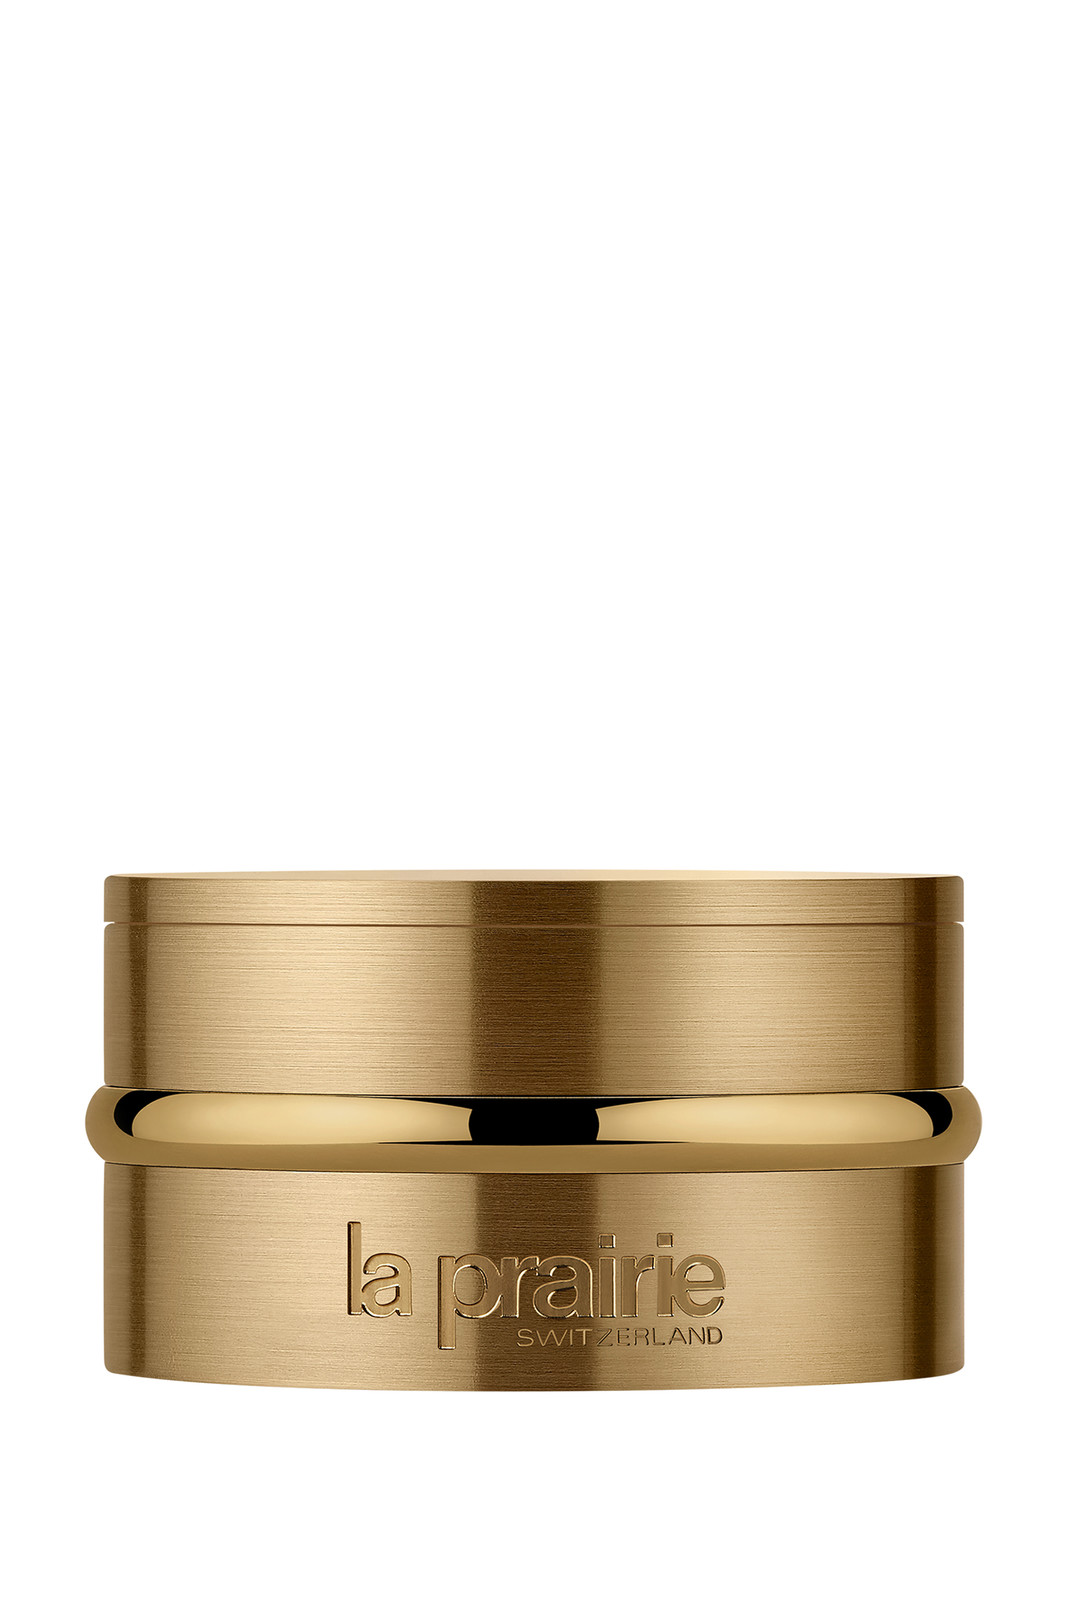  La Prairie Pure Gold Radiance Nocturnal Balm يمكن شراؤه من موقع Bloomingdales